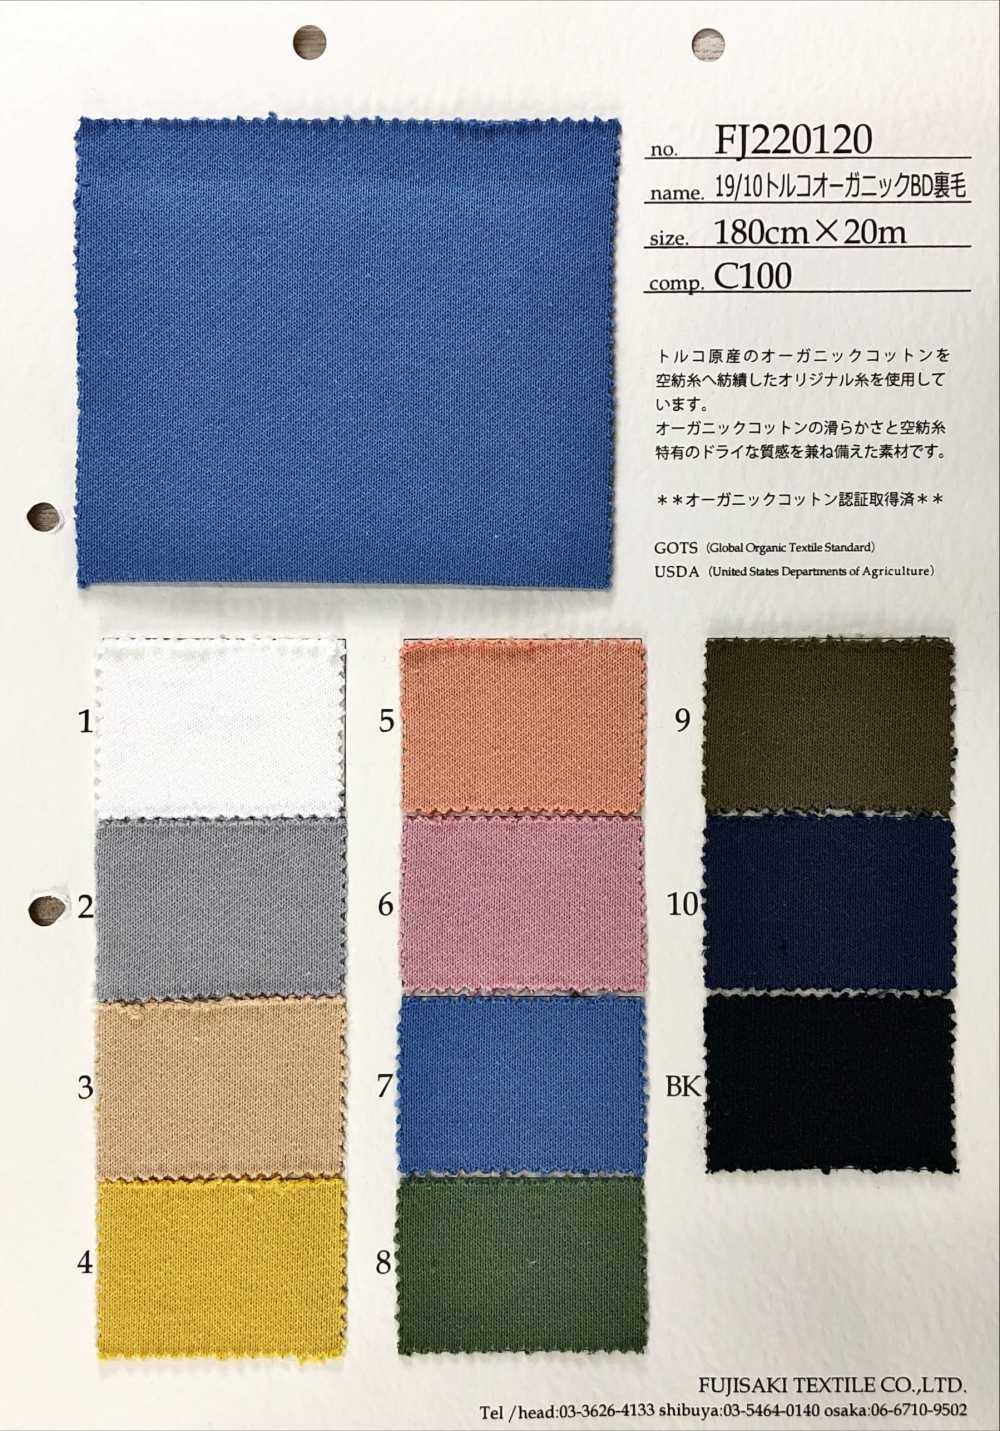 FJ220120 19/10 Polar Orgánico Turco BD[Fabrica Textil] Fujisaki Textile